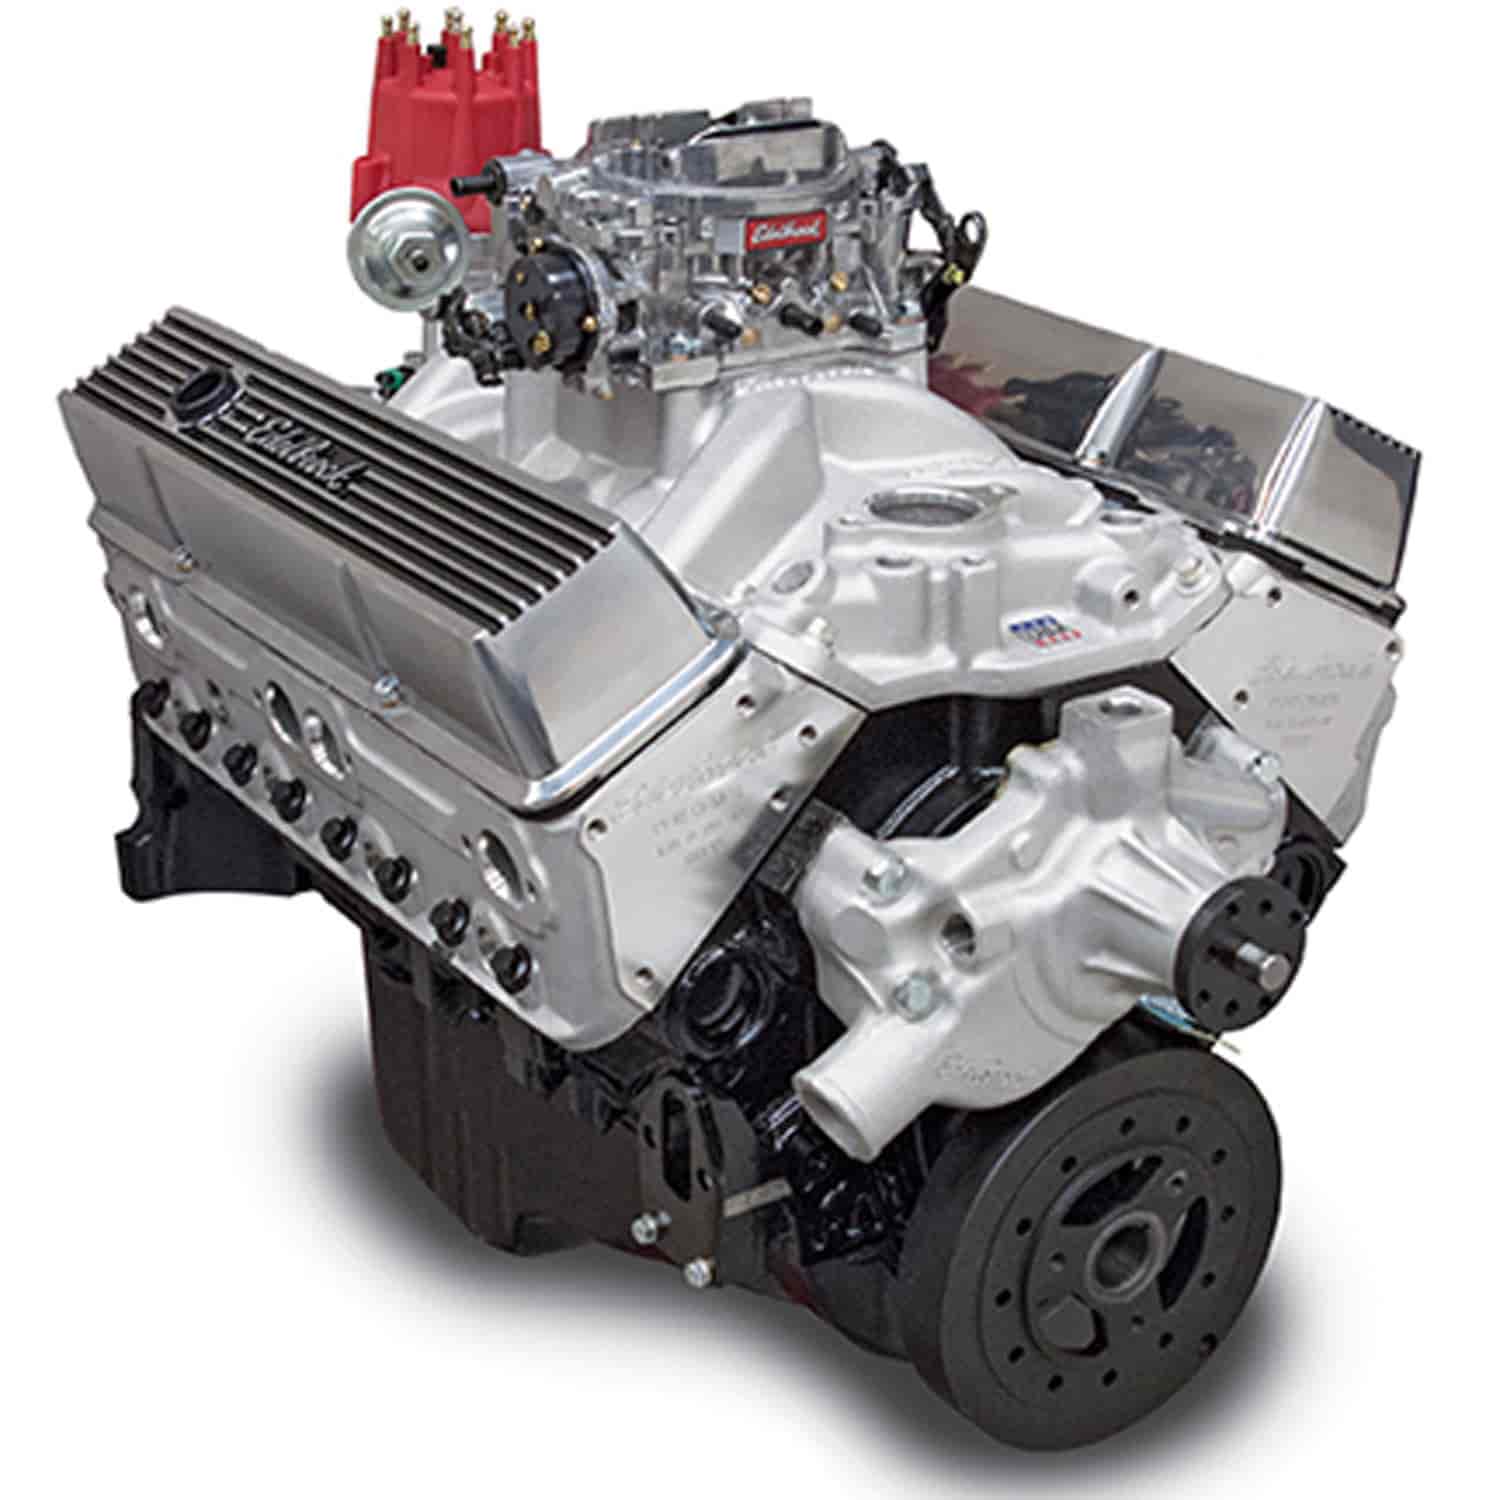 Performer SBC 350ci 310HP Crate Engine, Satin Finish, Short Water Pump